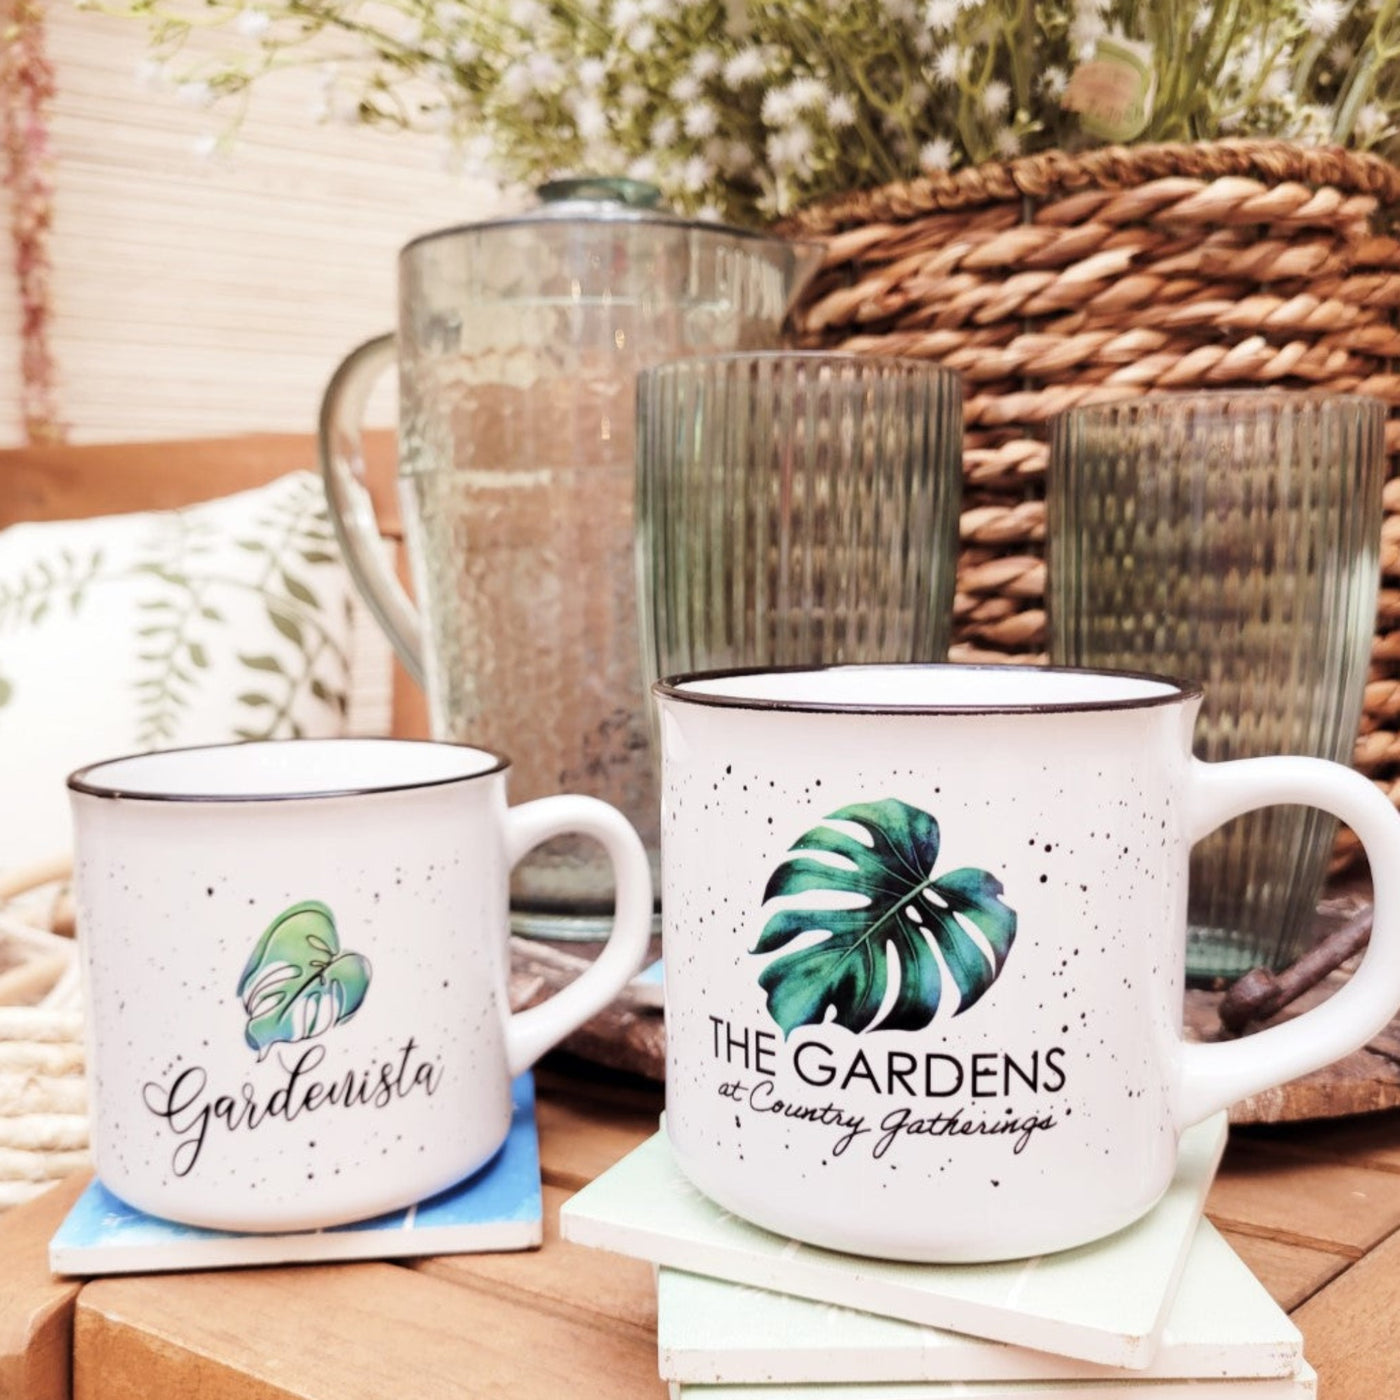 The Gardenista Mug